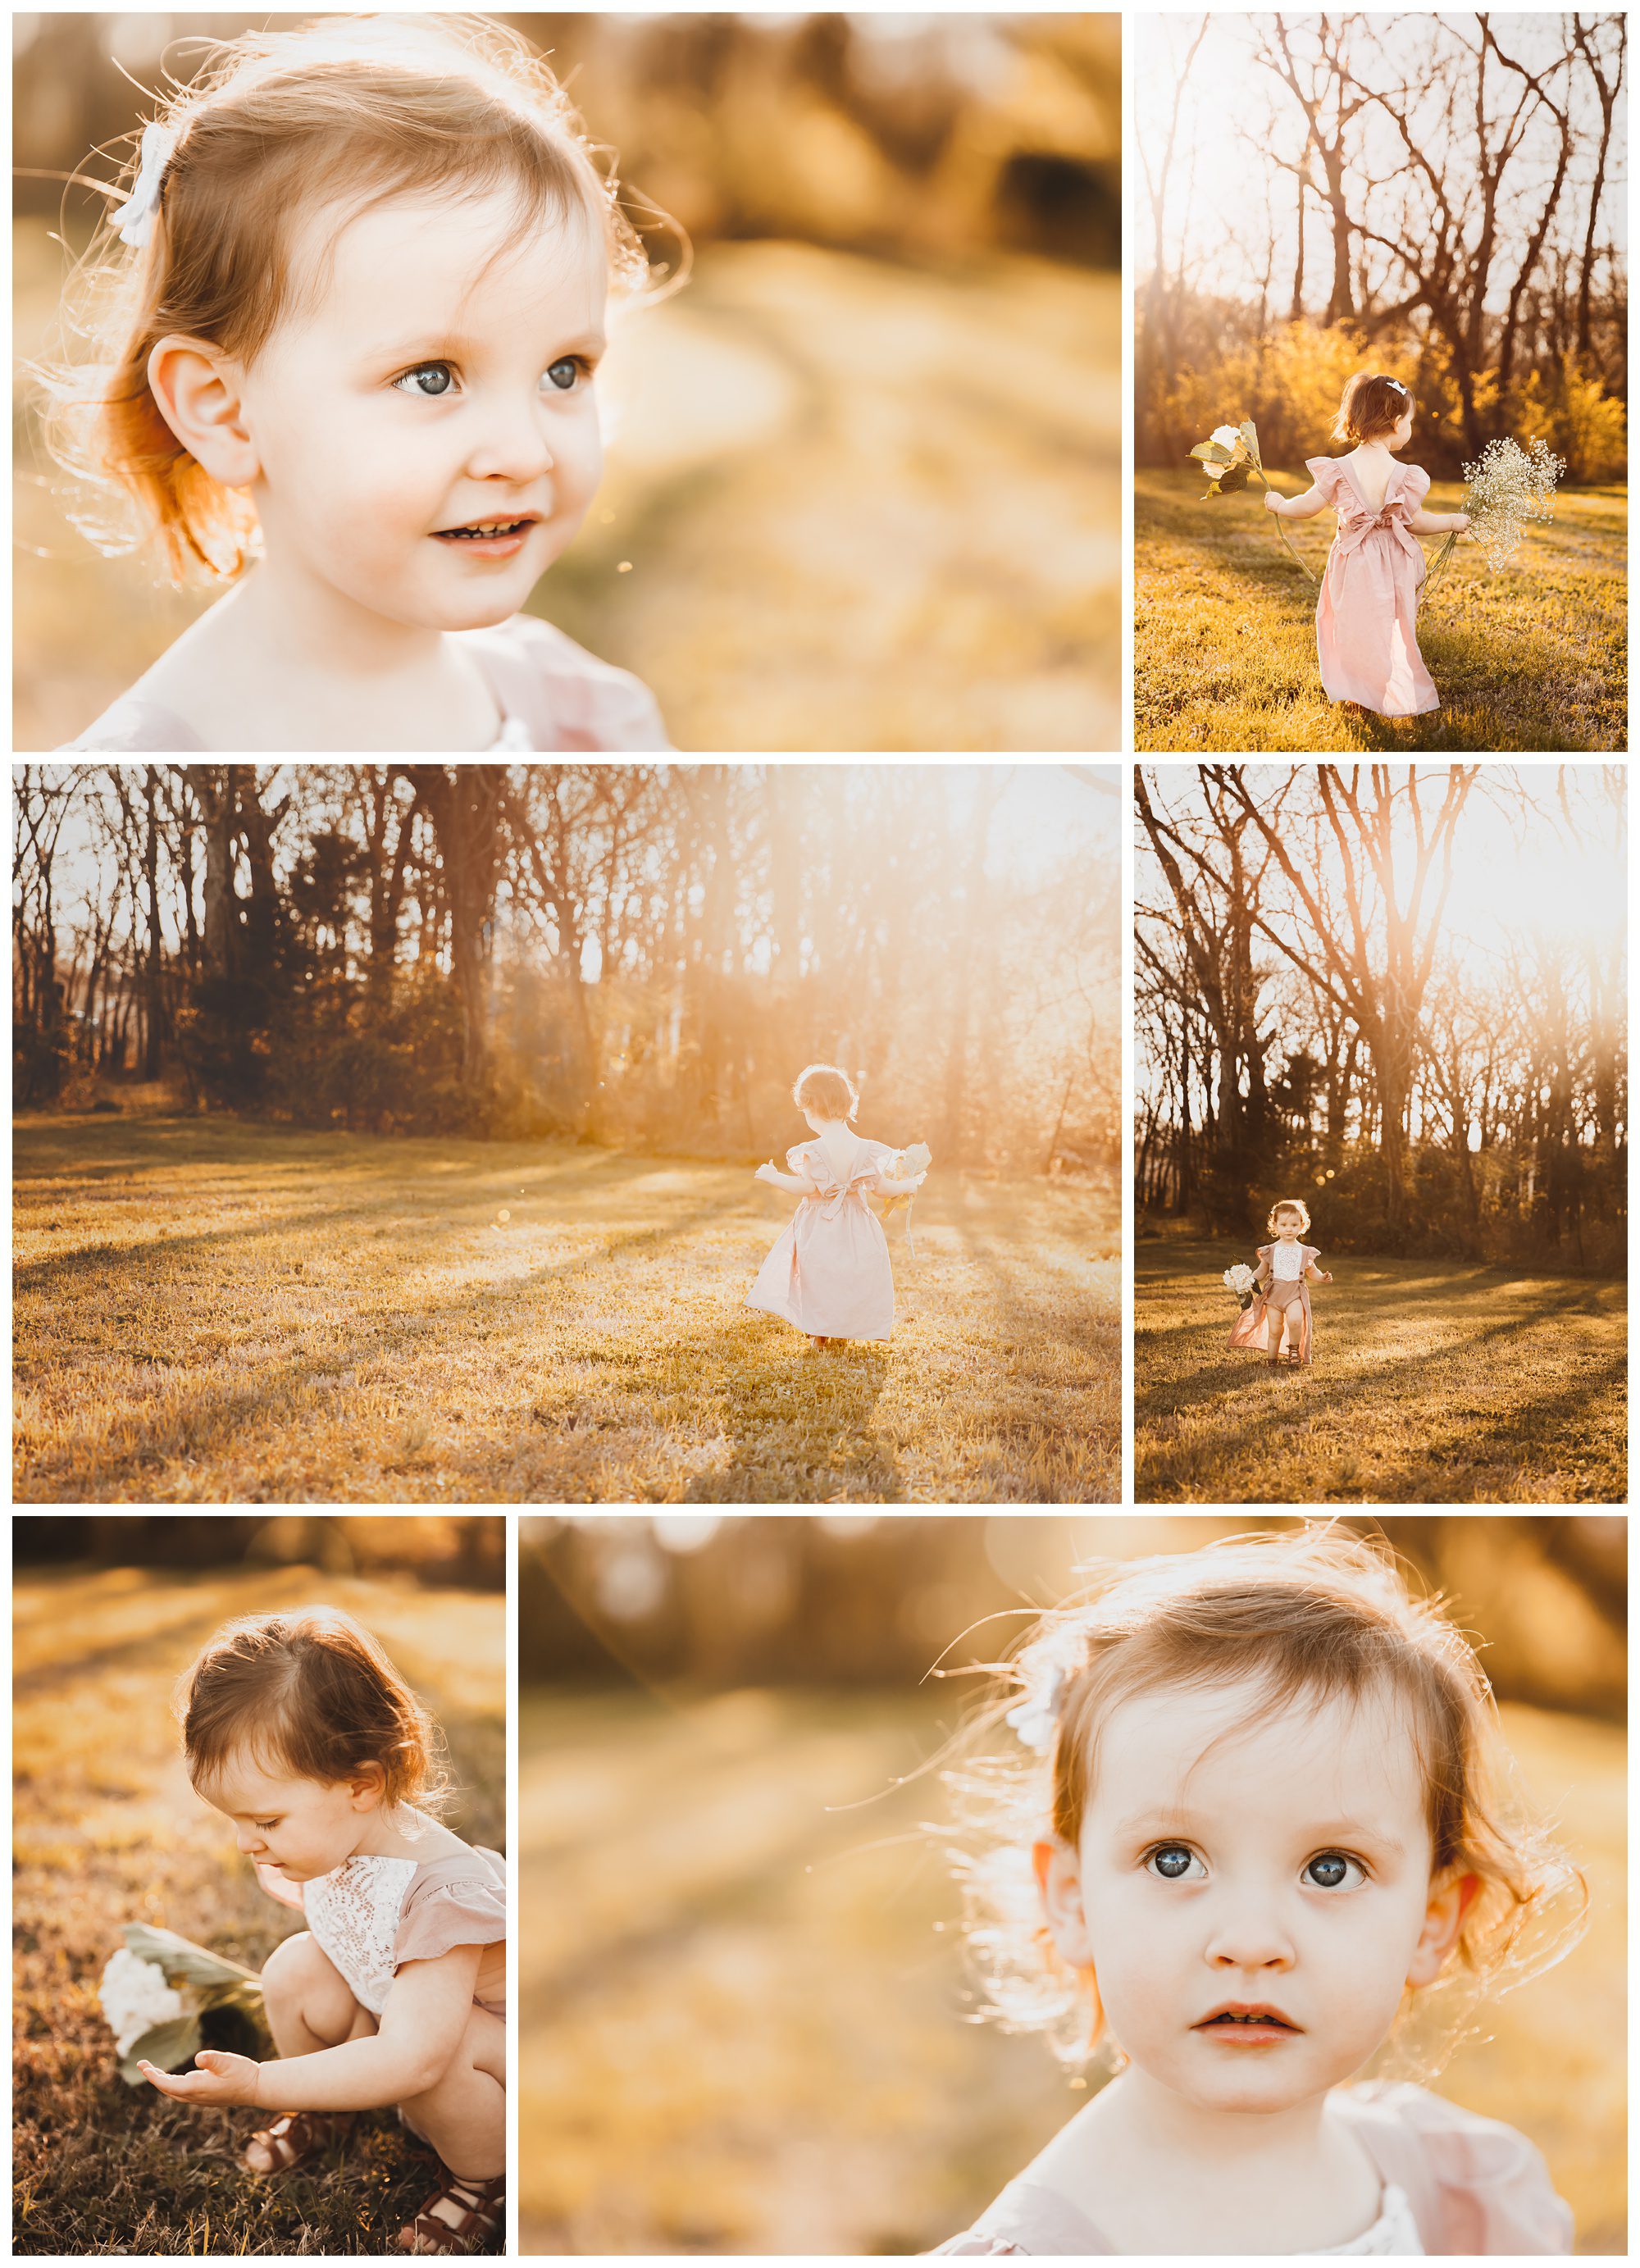 Milestone Session, Lifestyle Photography, Outdoor Session, Nashville Family Photographer, Nashville Baby Photographer, 2 Year Old Photography Session